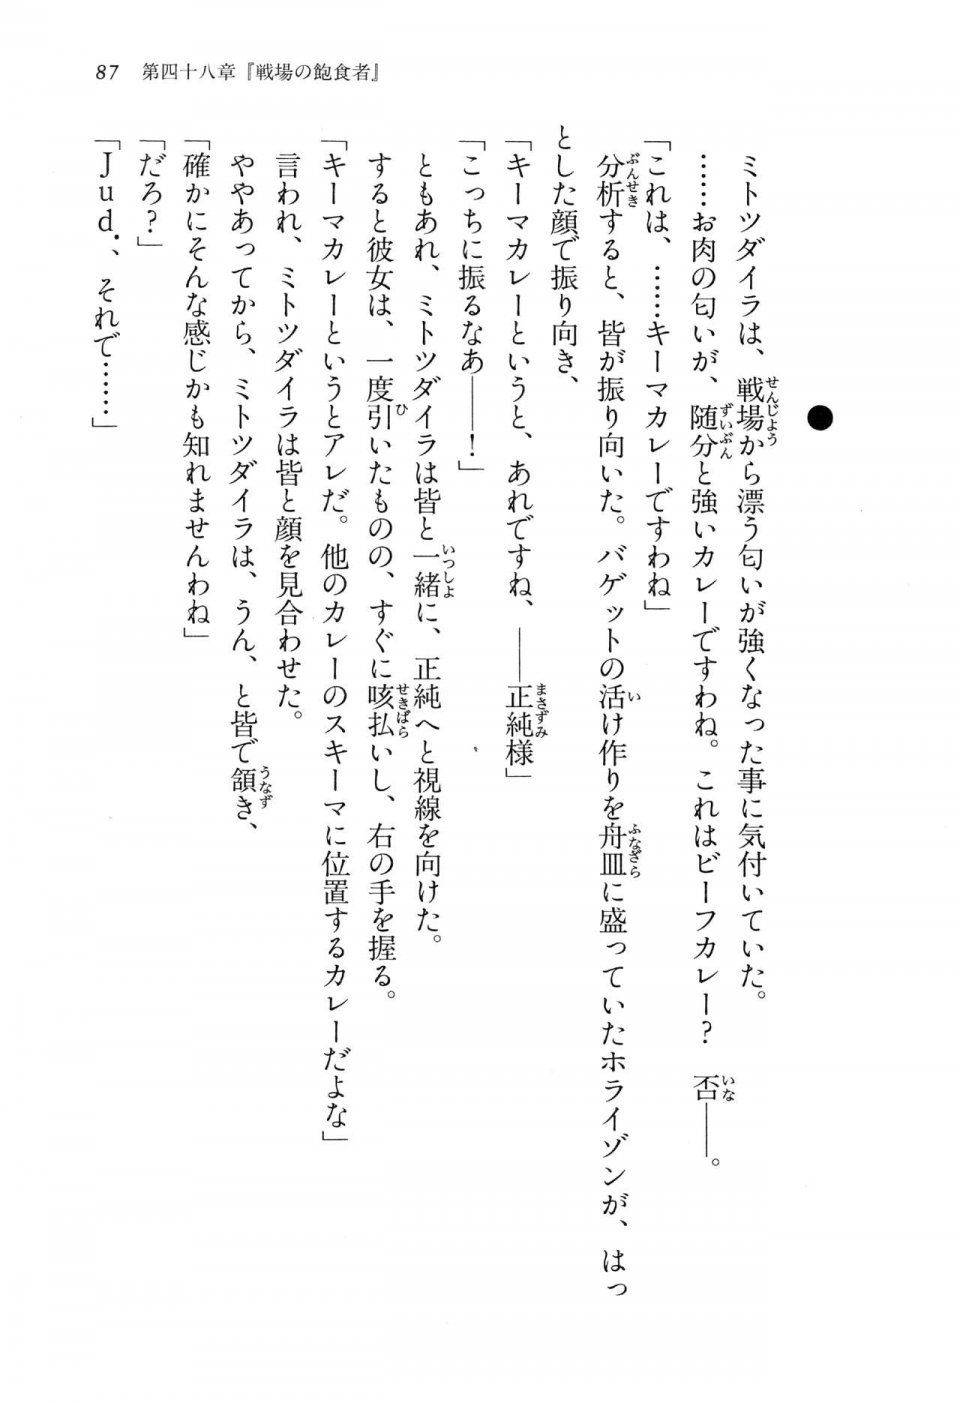 Kyoukai Senjou no Horizon LN Vol 15(6C) Part 1 - Photo #87